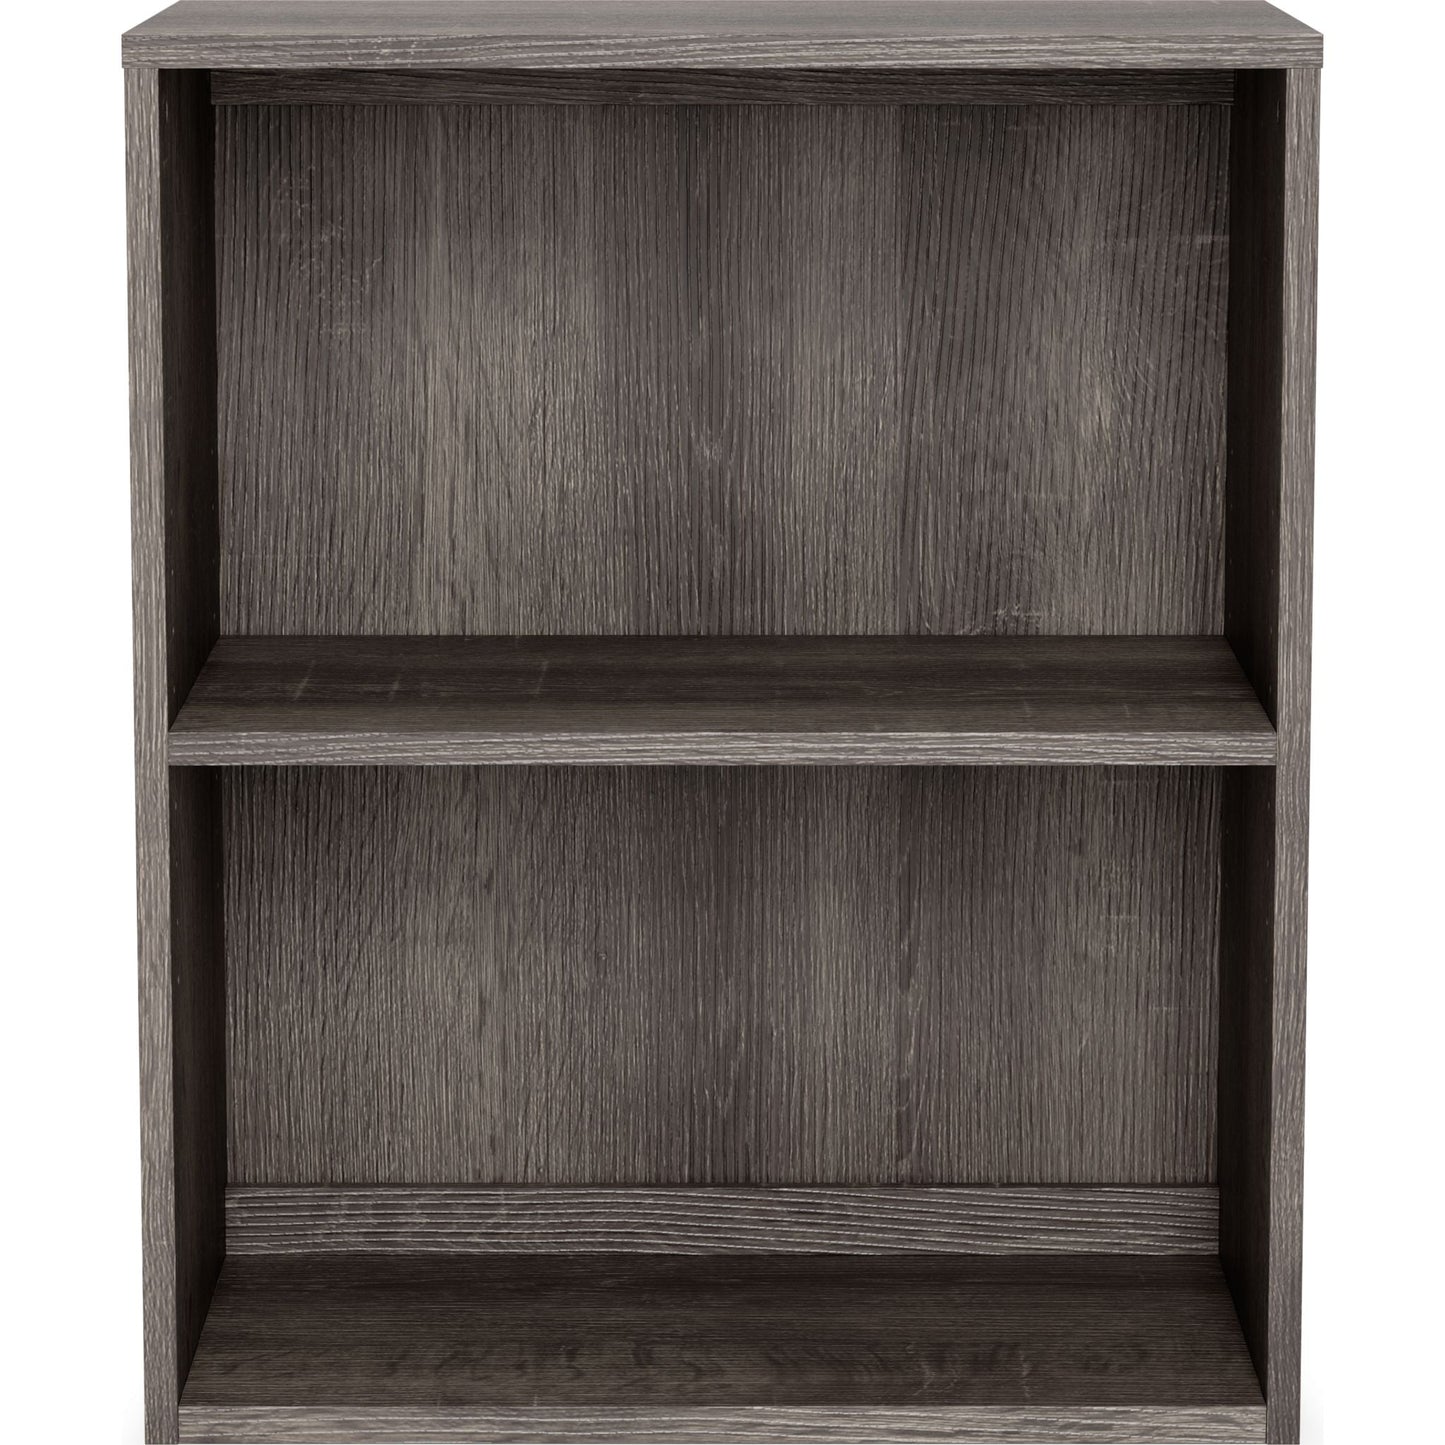 Arlenbry Small Bookcase - Gray